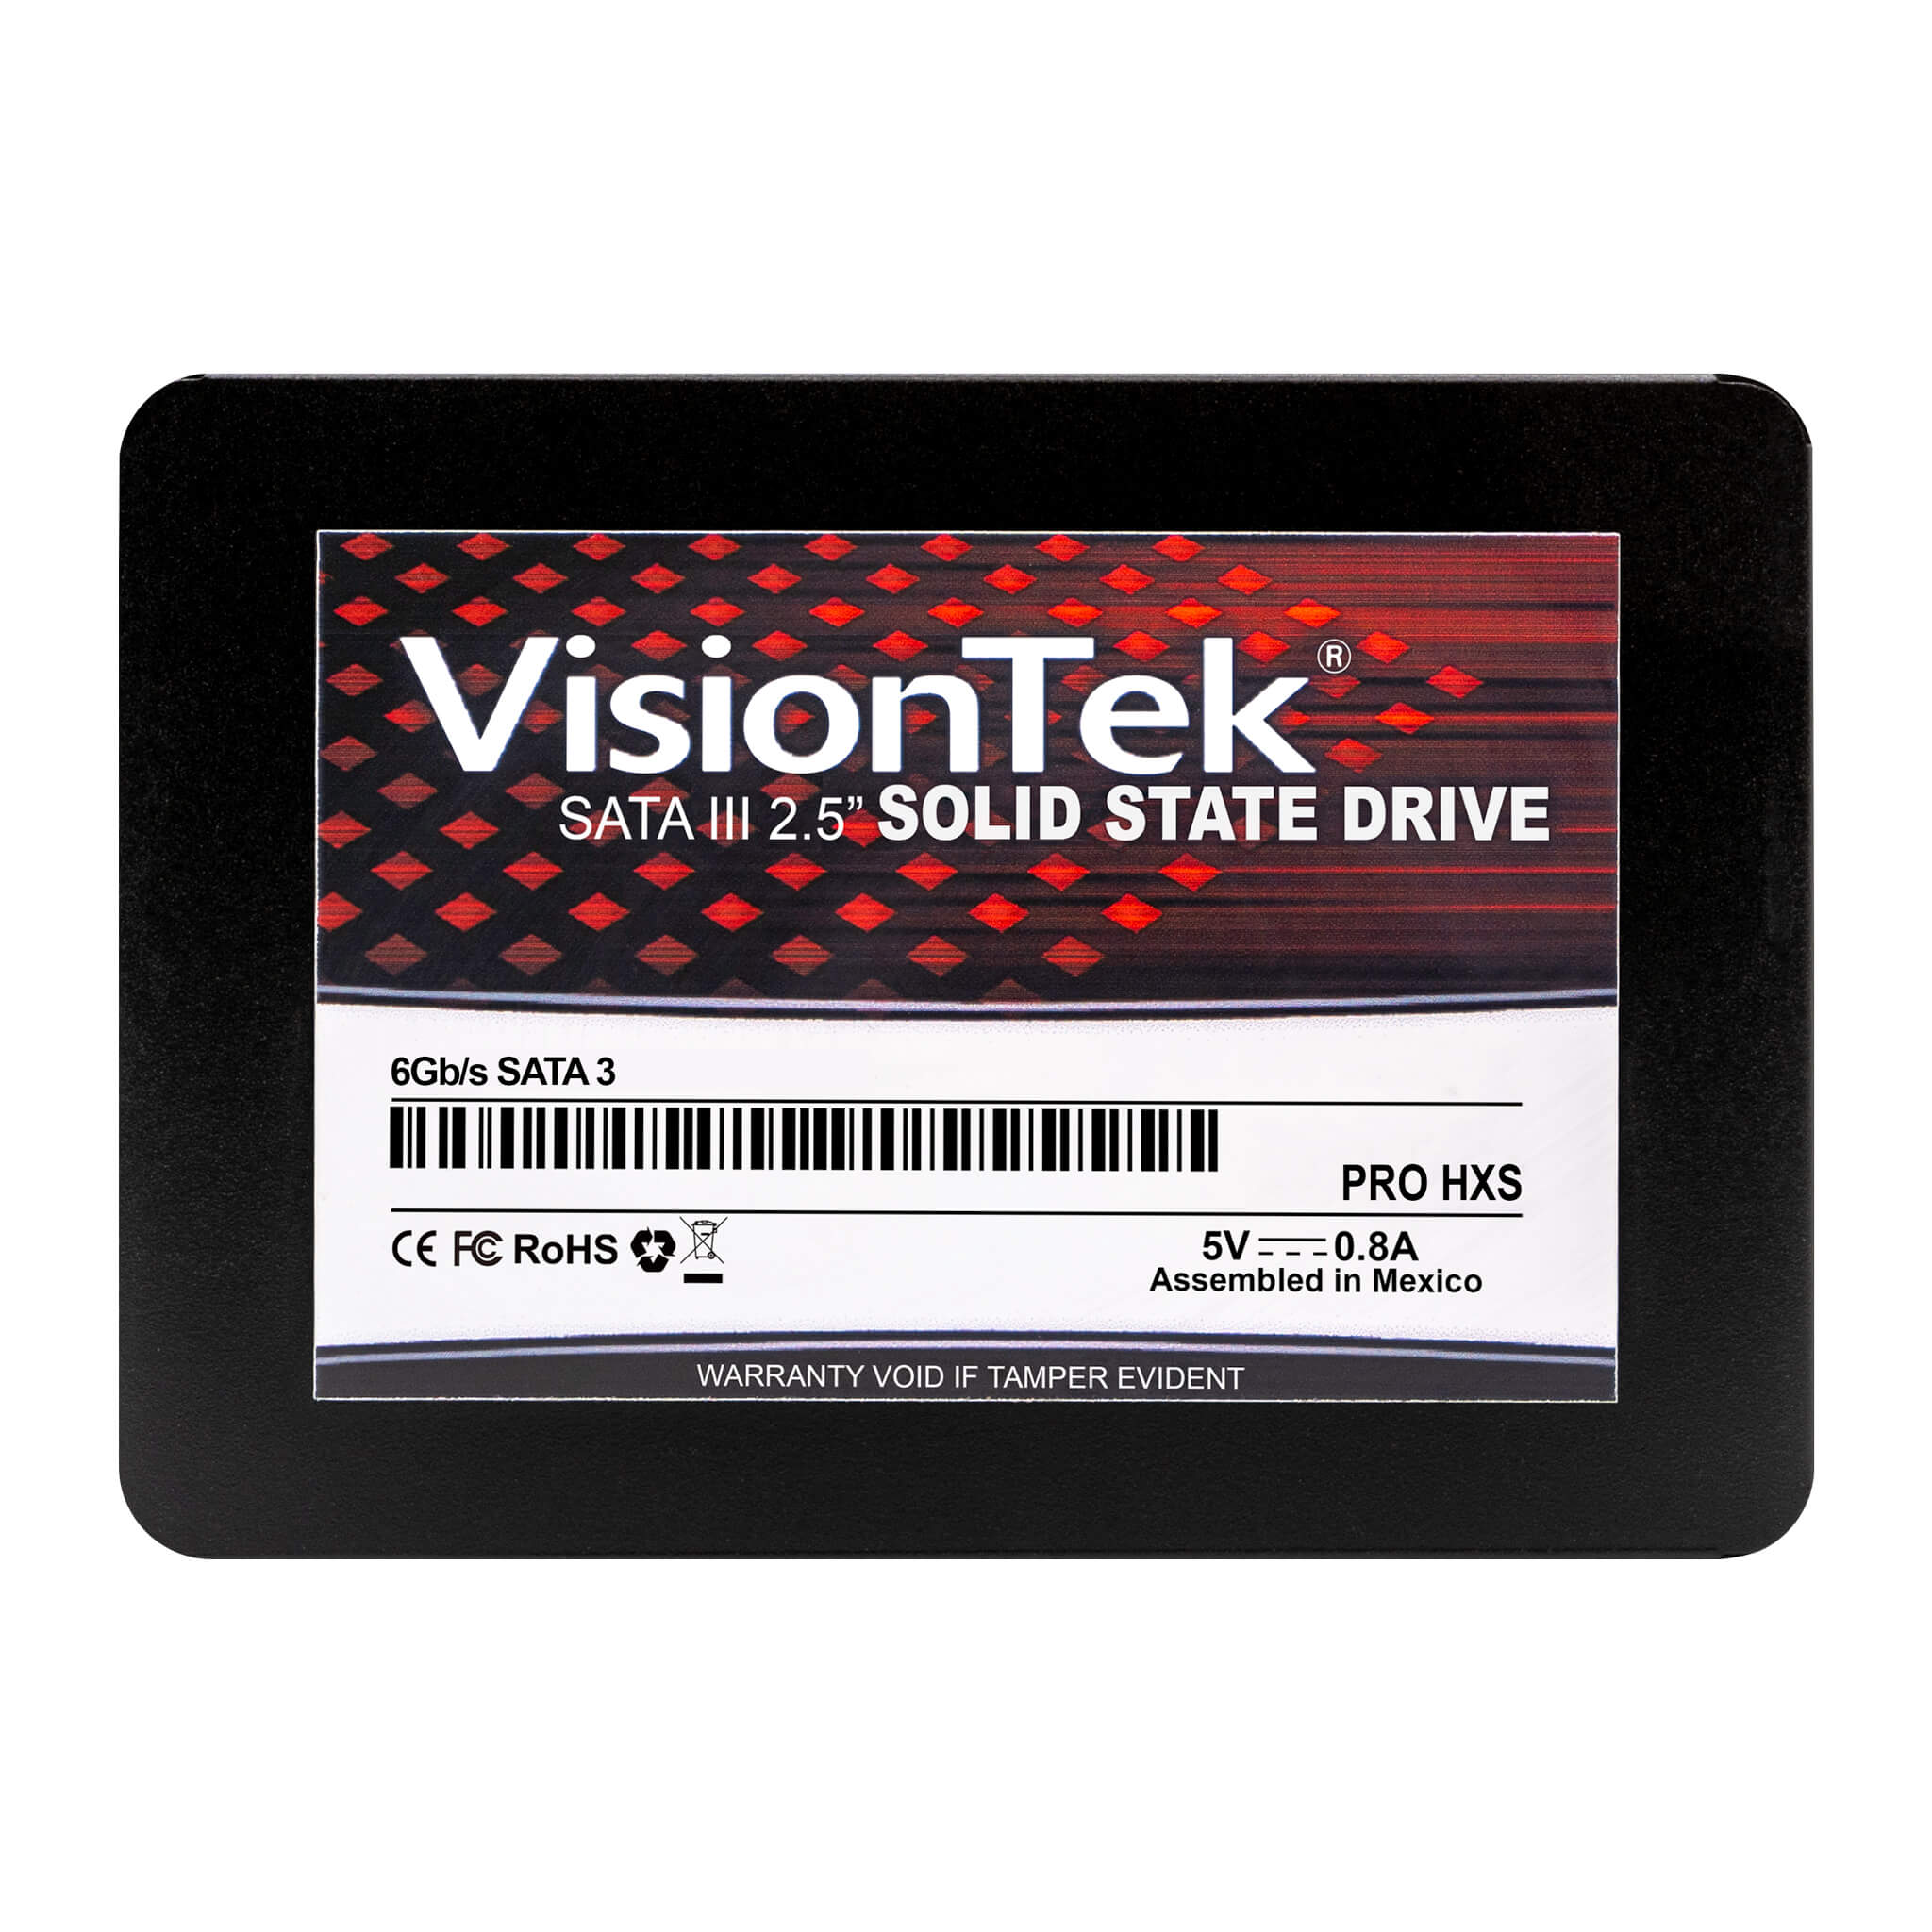 VisionTek PRO HXS 7mm 2.5